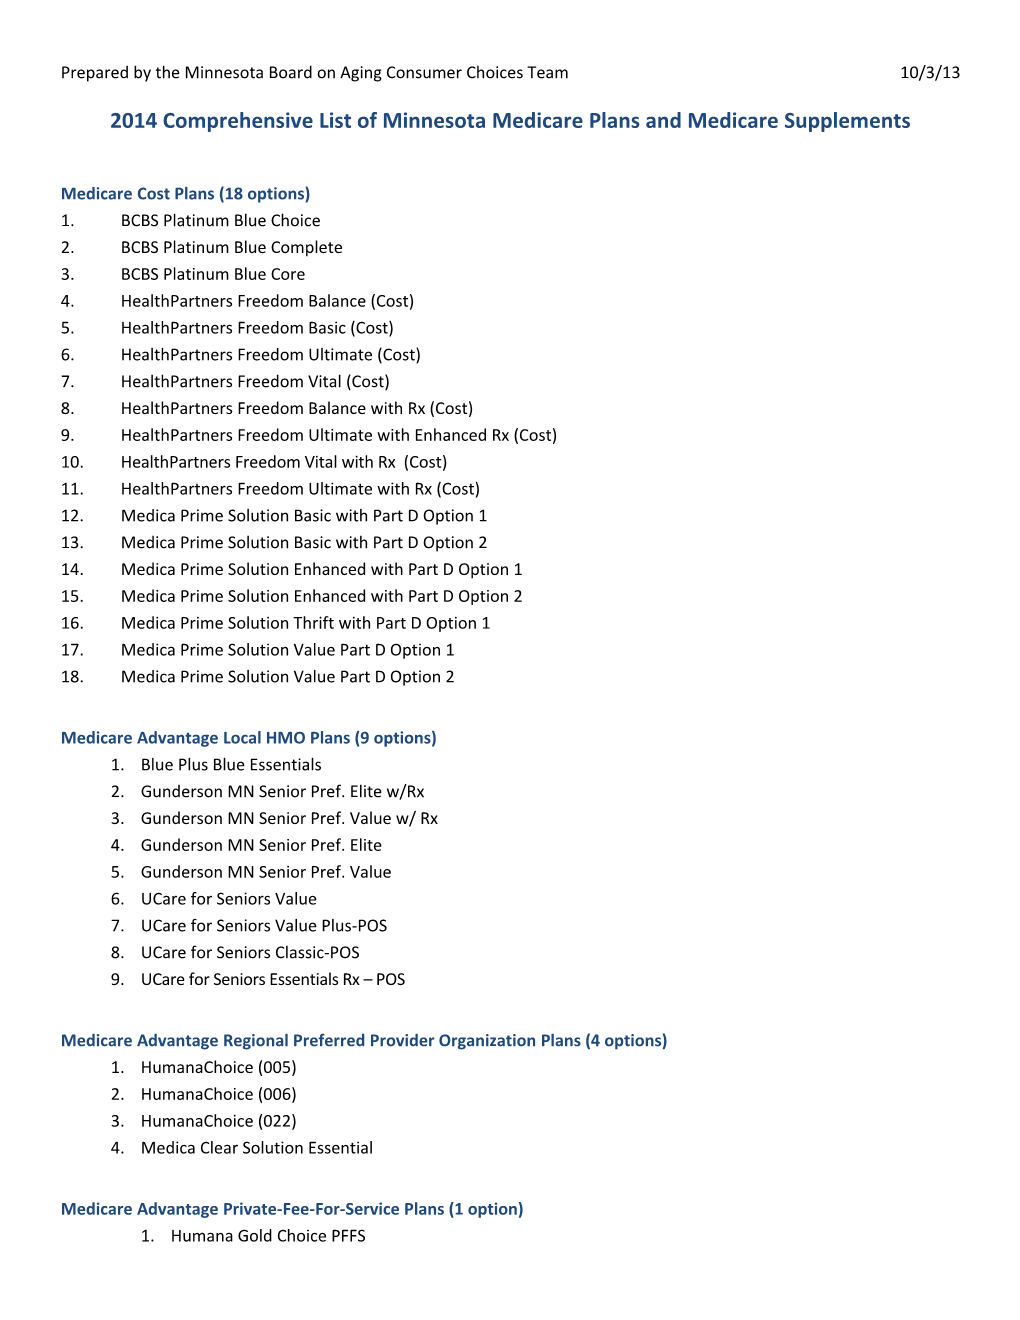 2014 Comprehensive List of Minnesota Medicare Plans and Medicare Supplements